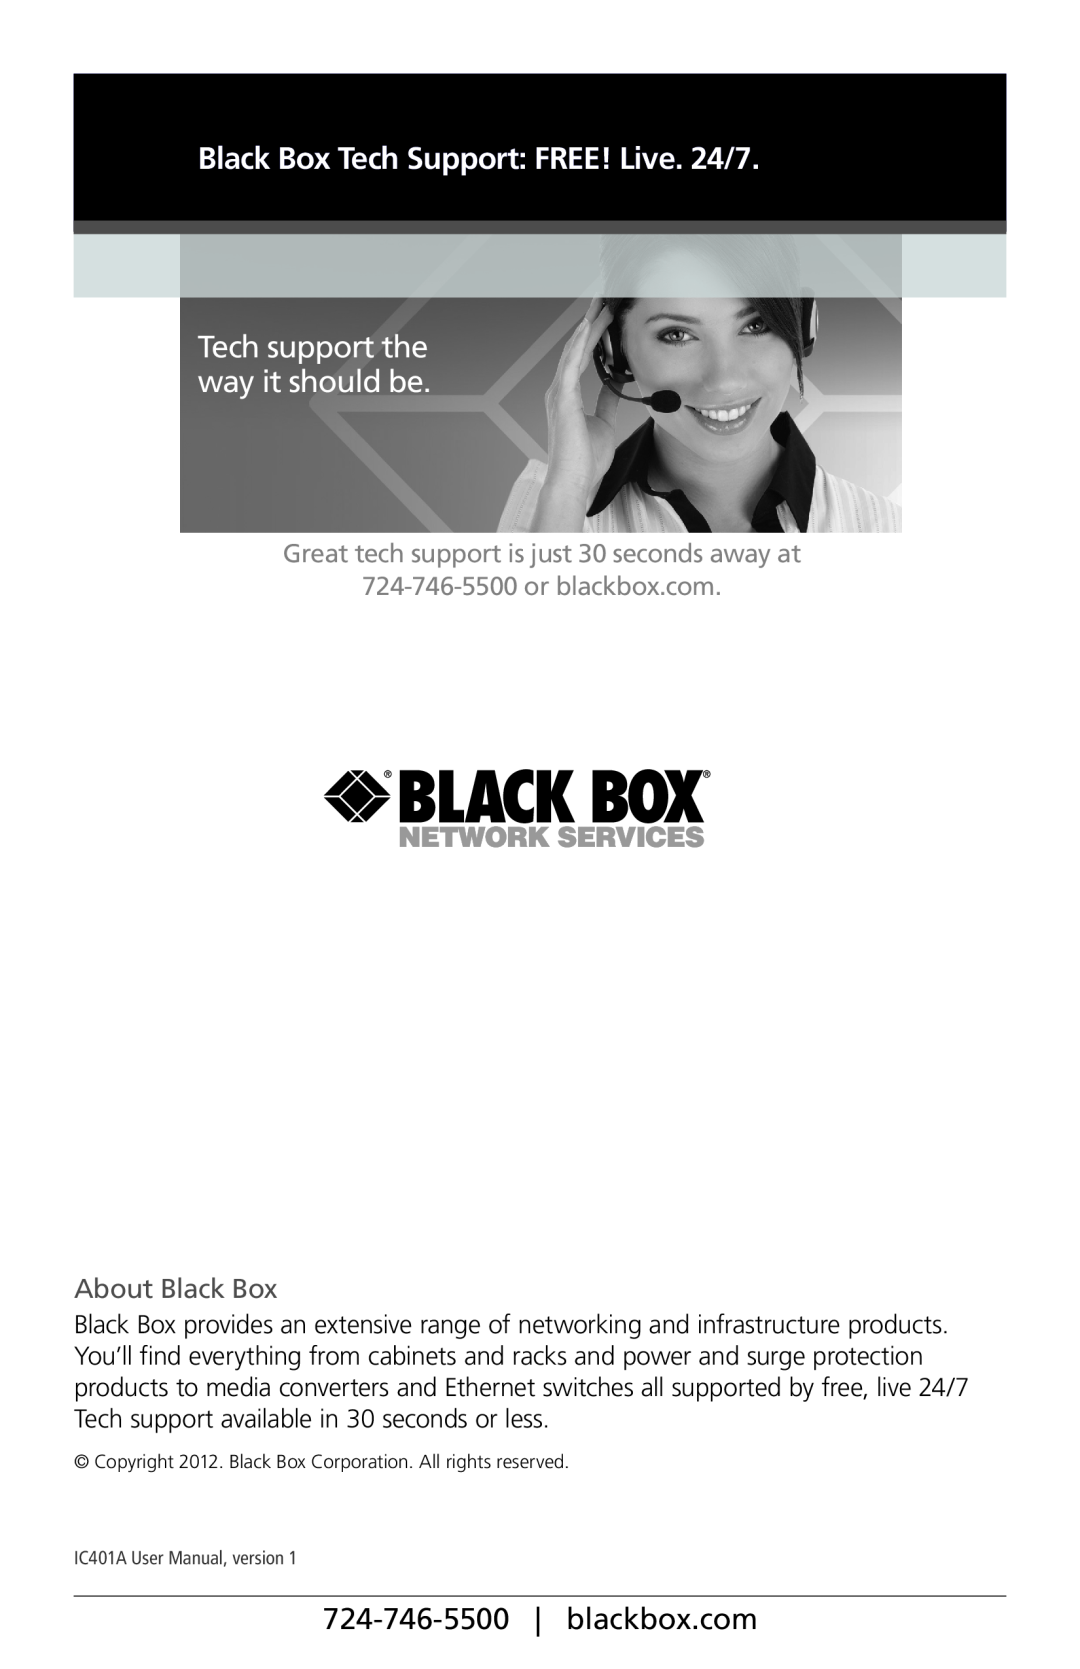 Black Box IC401A Tech support the way it should be, About Black Box, Black Box Tech Support FREE! Live. 24/7, blackbox.com 